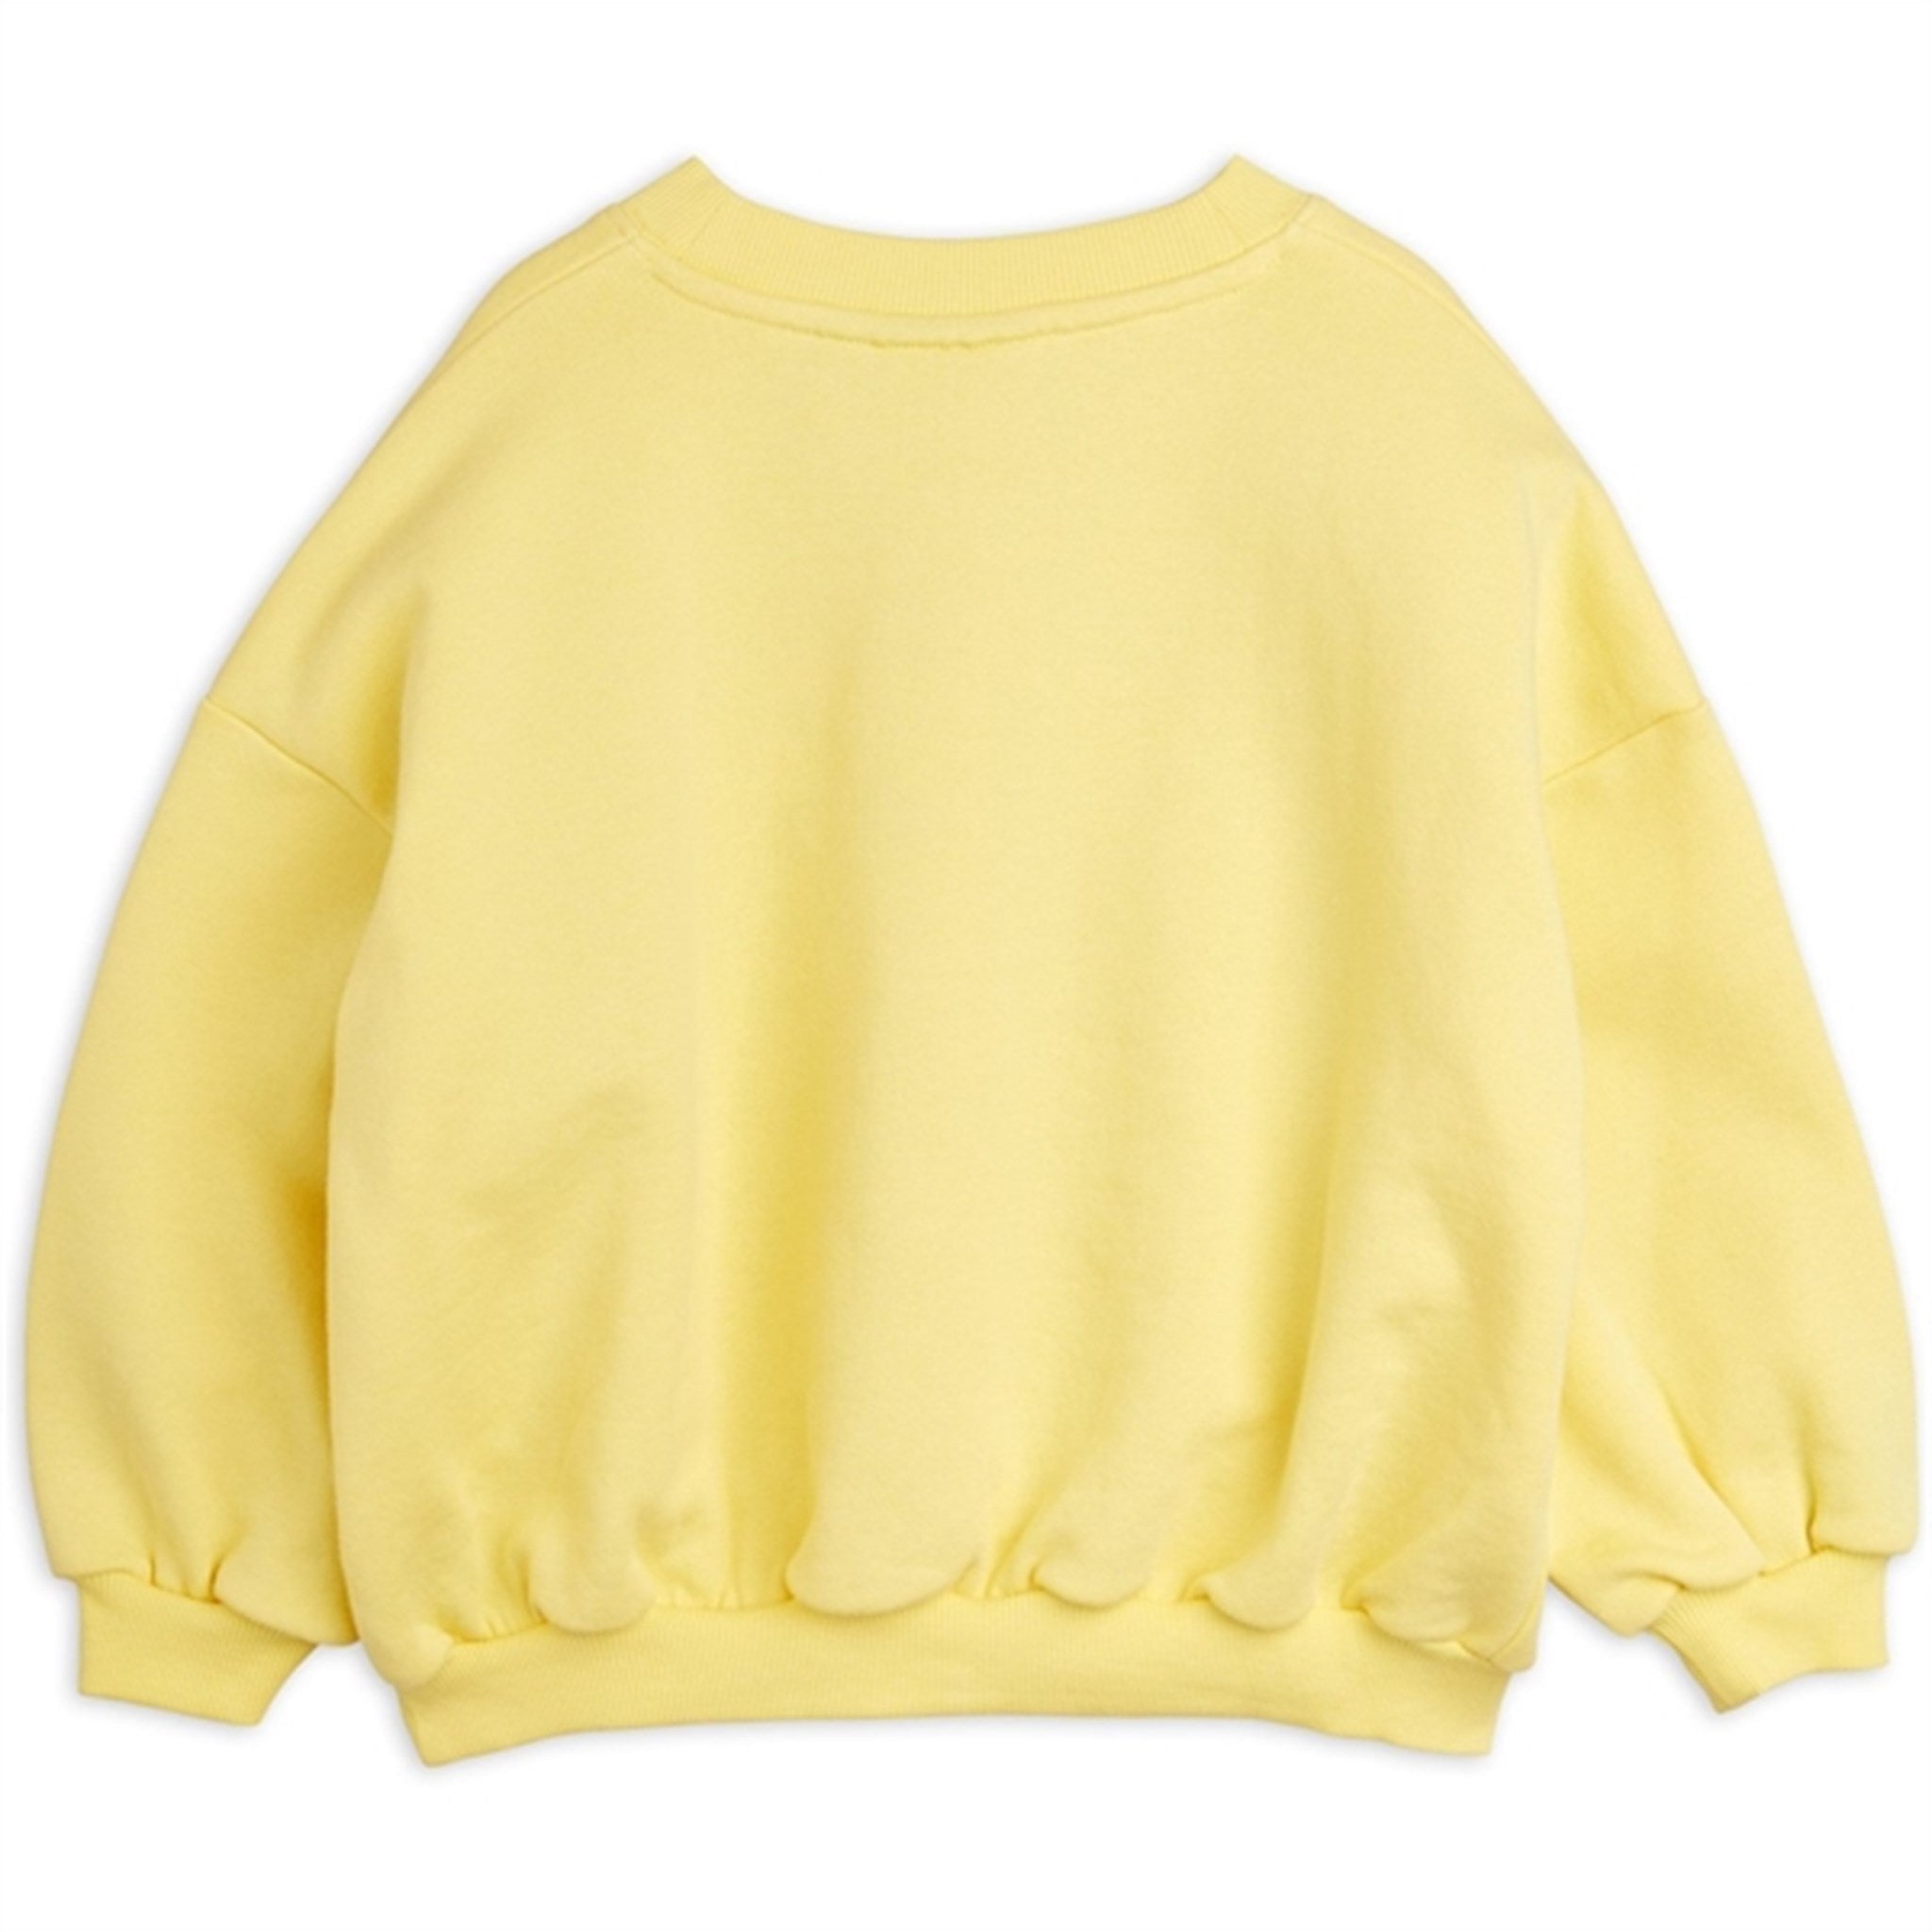 Mini Rodini Yellow Weight Lifting Sp Sweatshirt 4